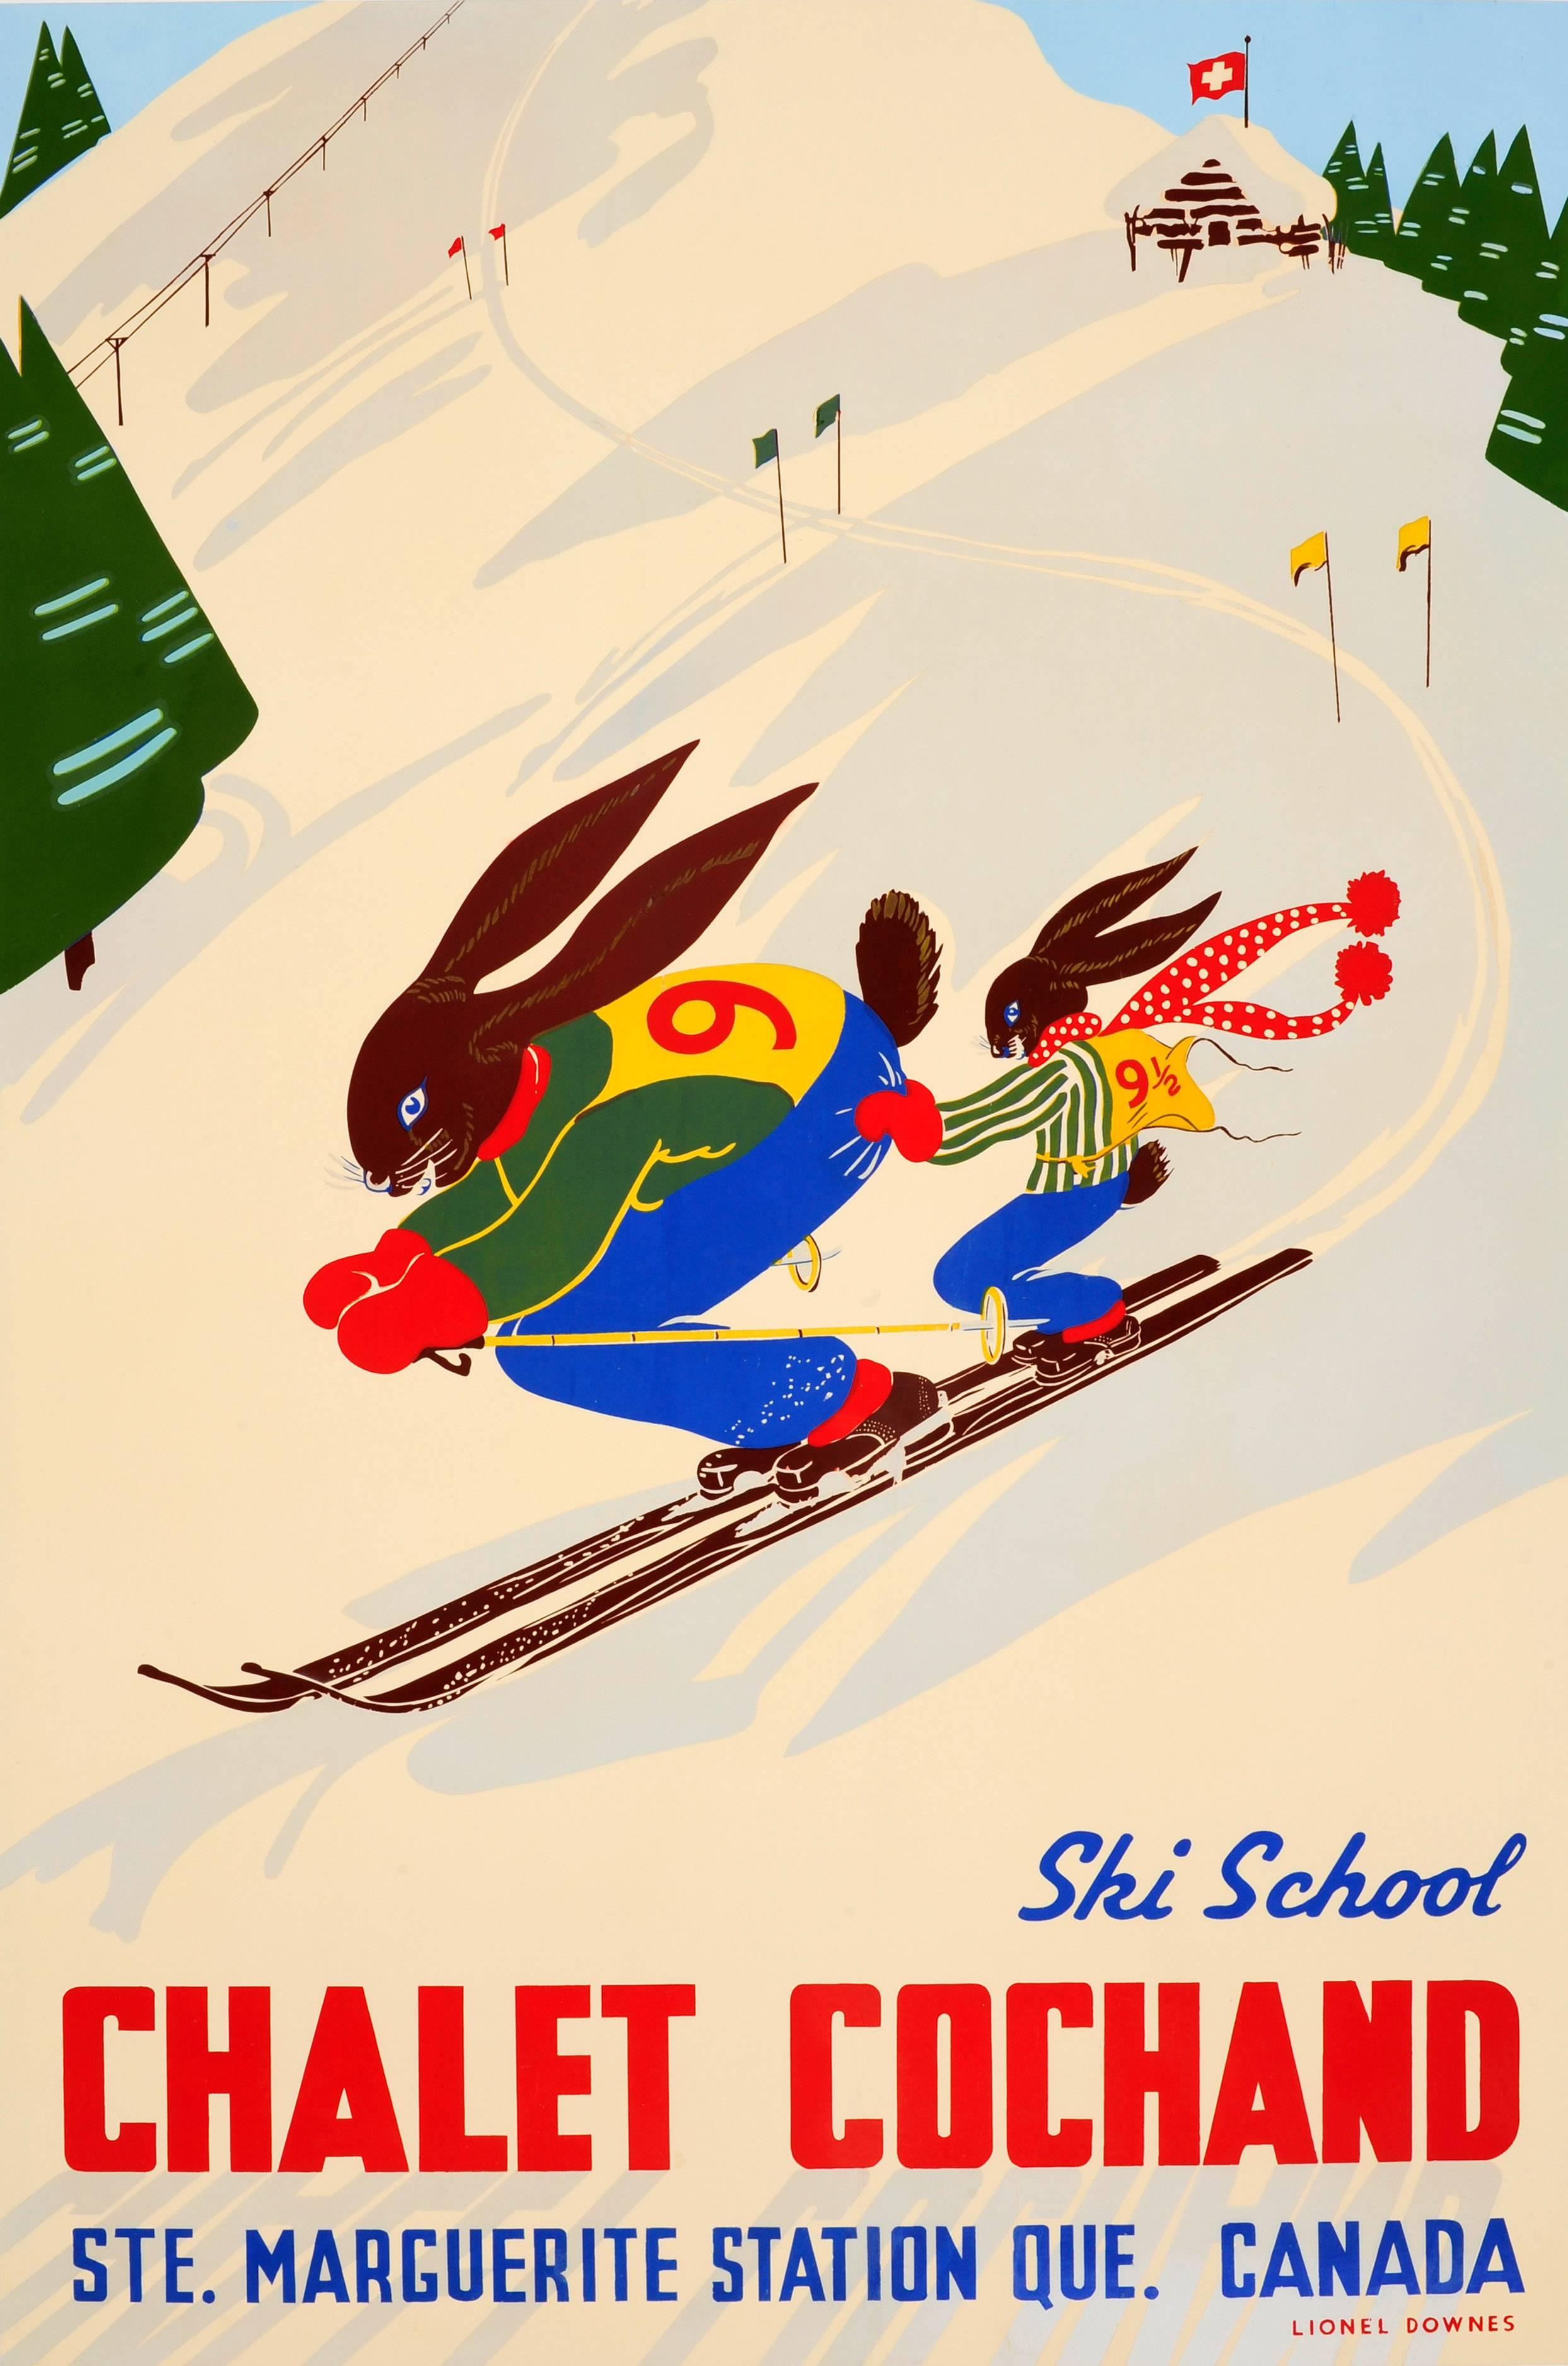 Lionel Downes Print - Original Winter Sport Poster Ski School Chalet Cochand Laurentians Quebec Canada